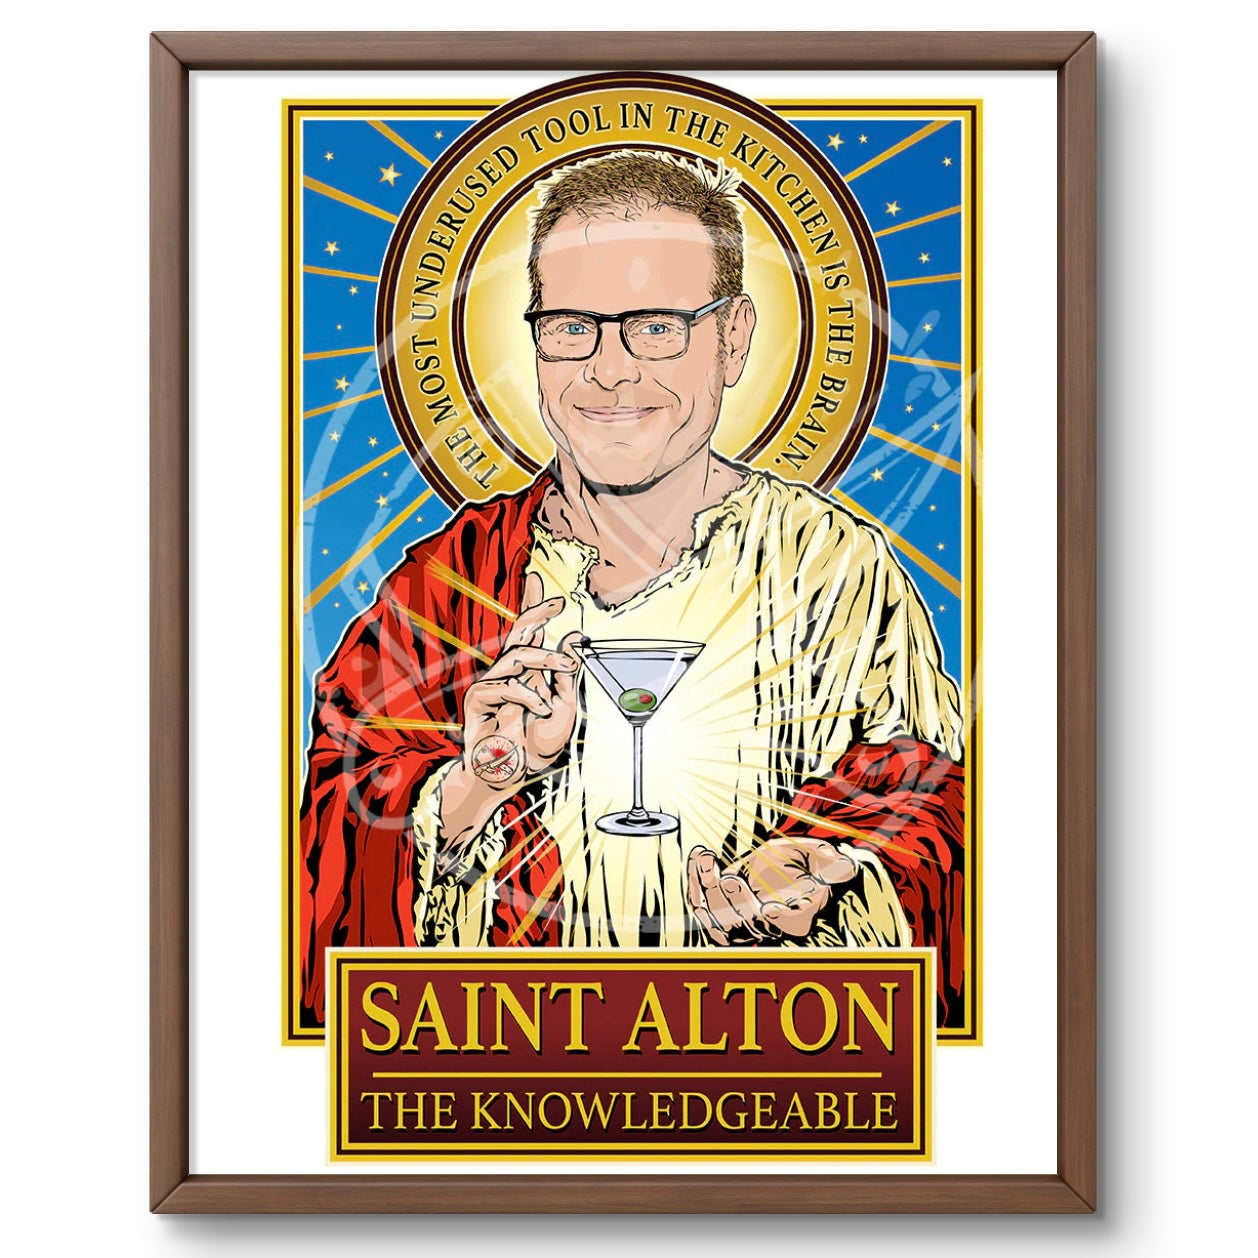 Saint Alton The Knowledgeable Poster Cleaverandblade.com